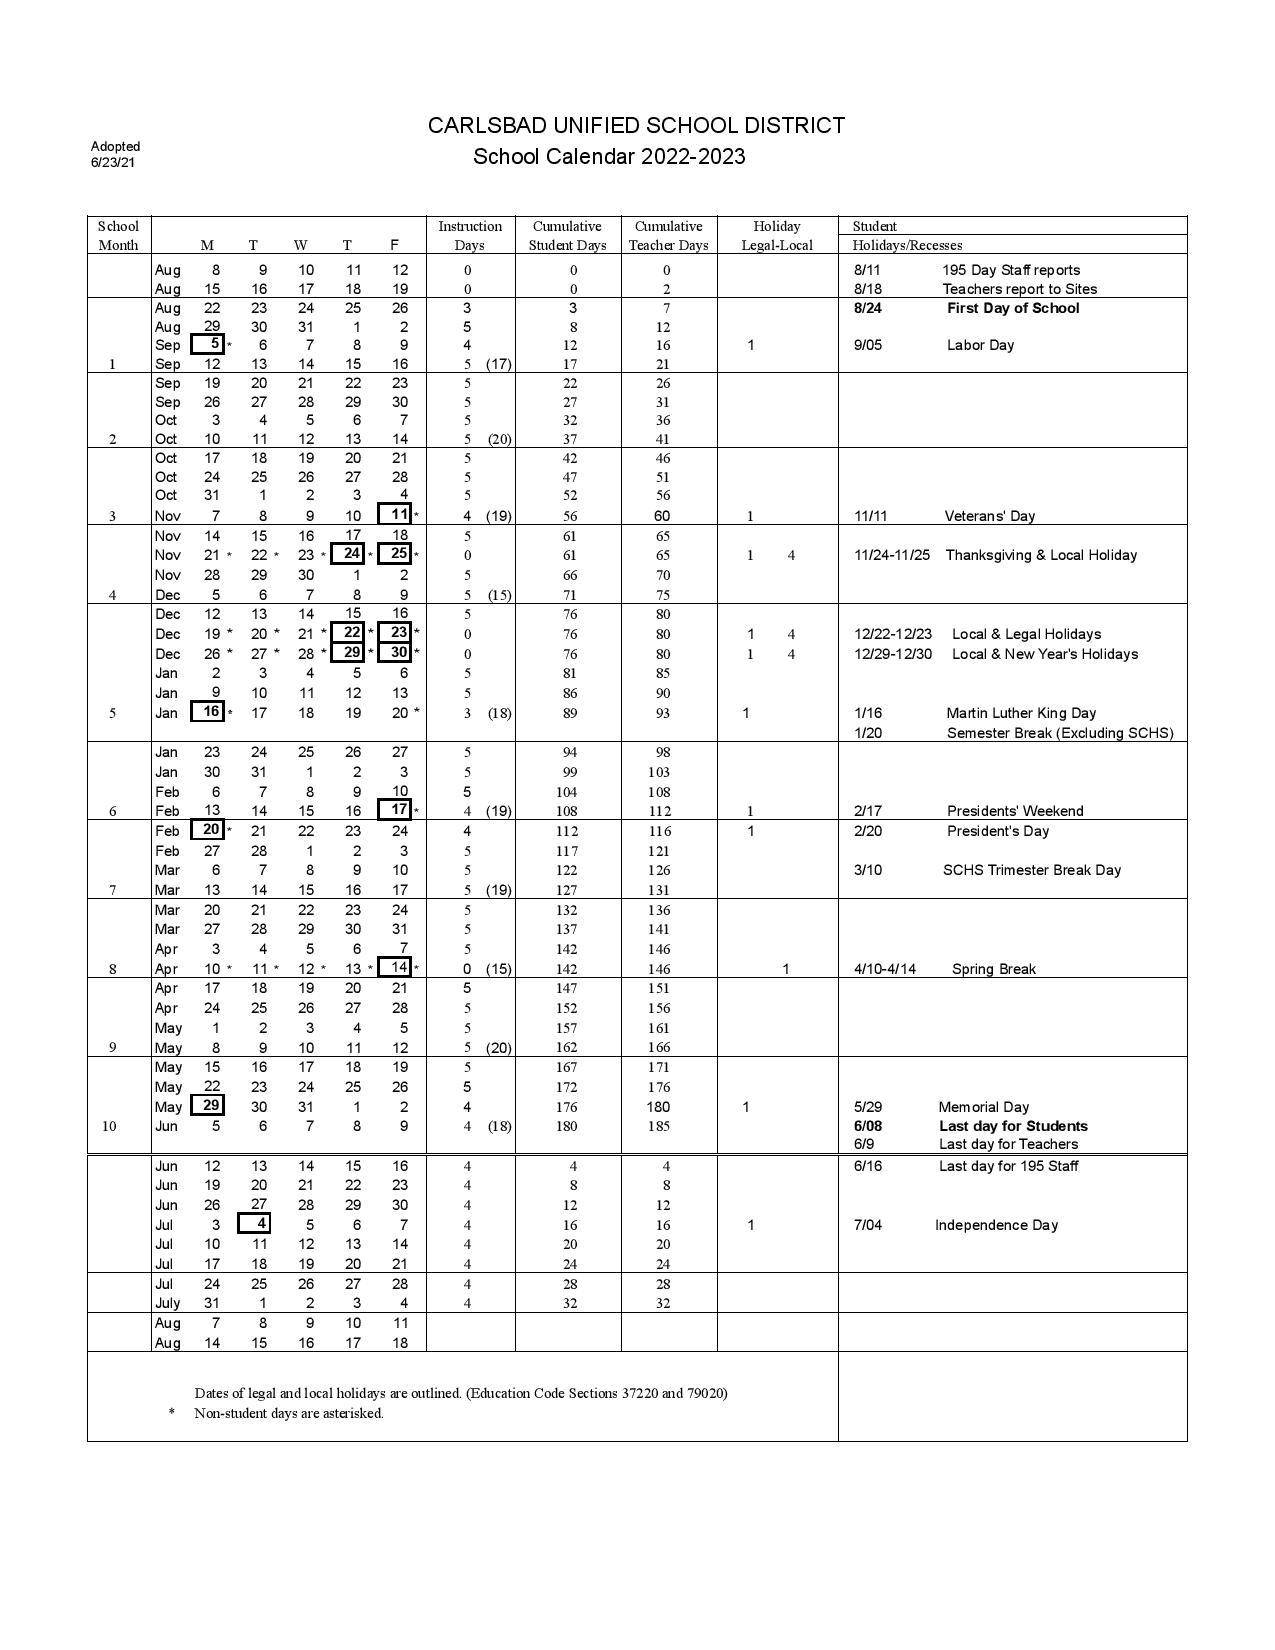 Carlsbad Unified School District Calendar 2022-2023